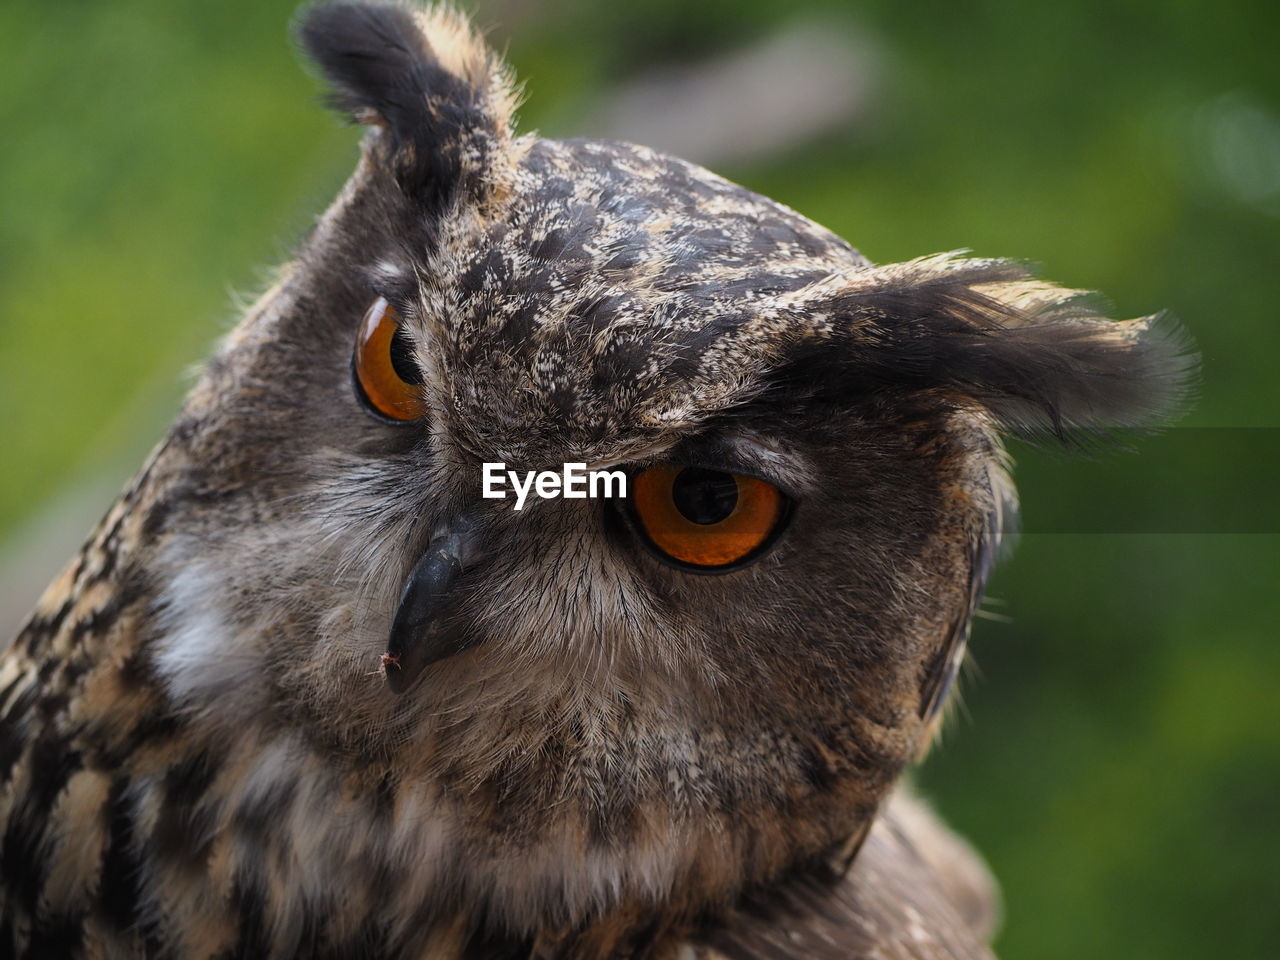 Close-up of a owl